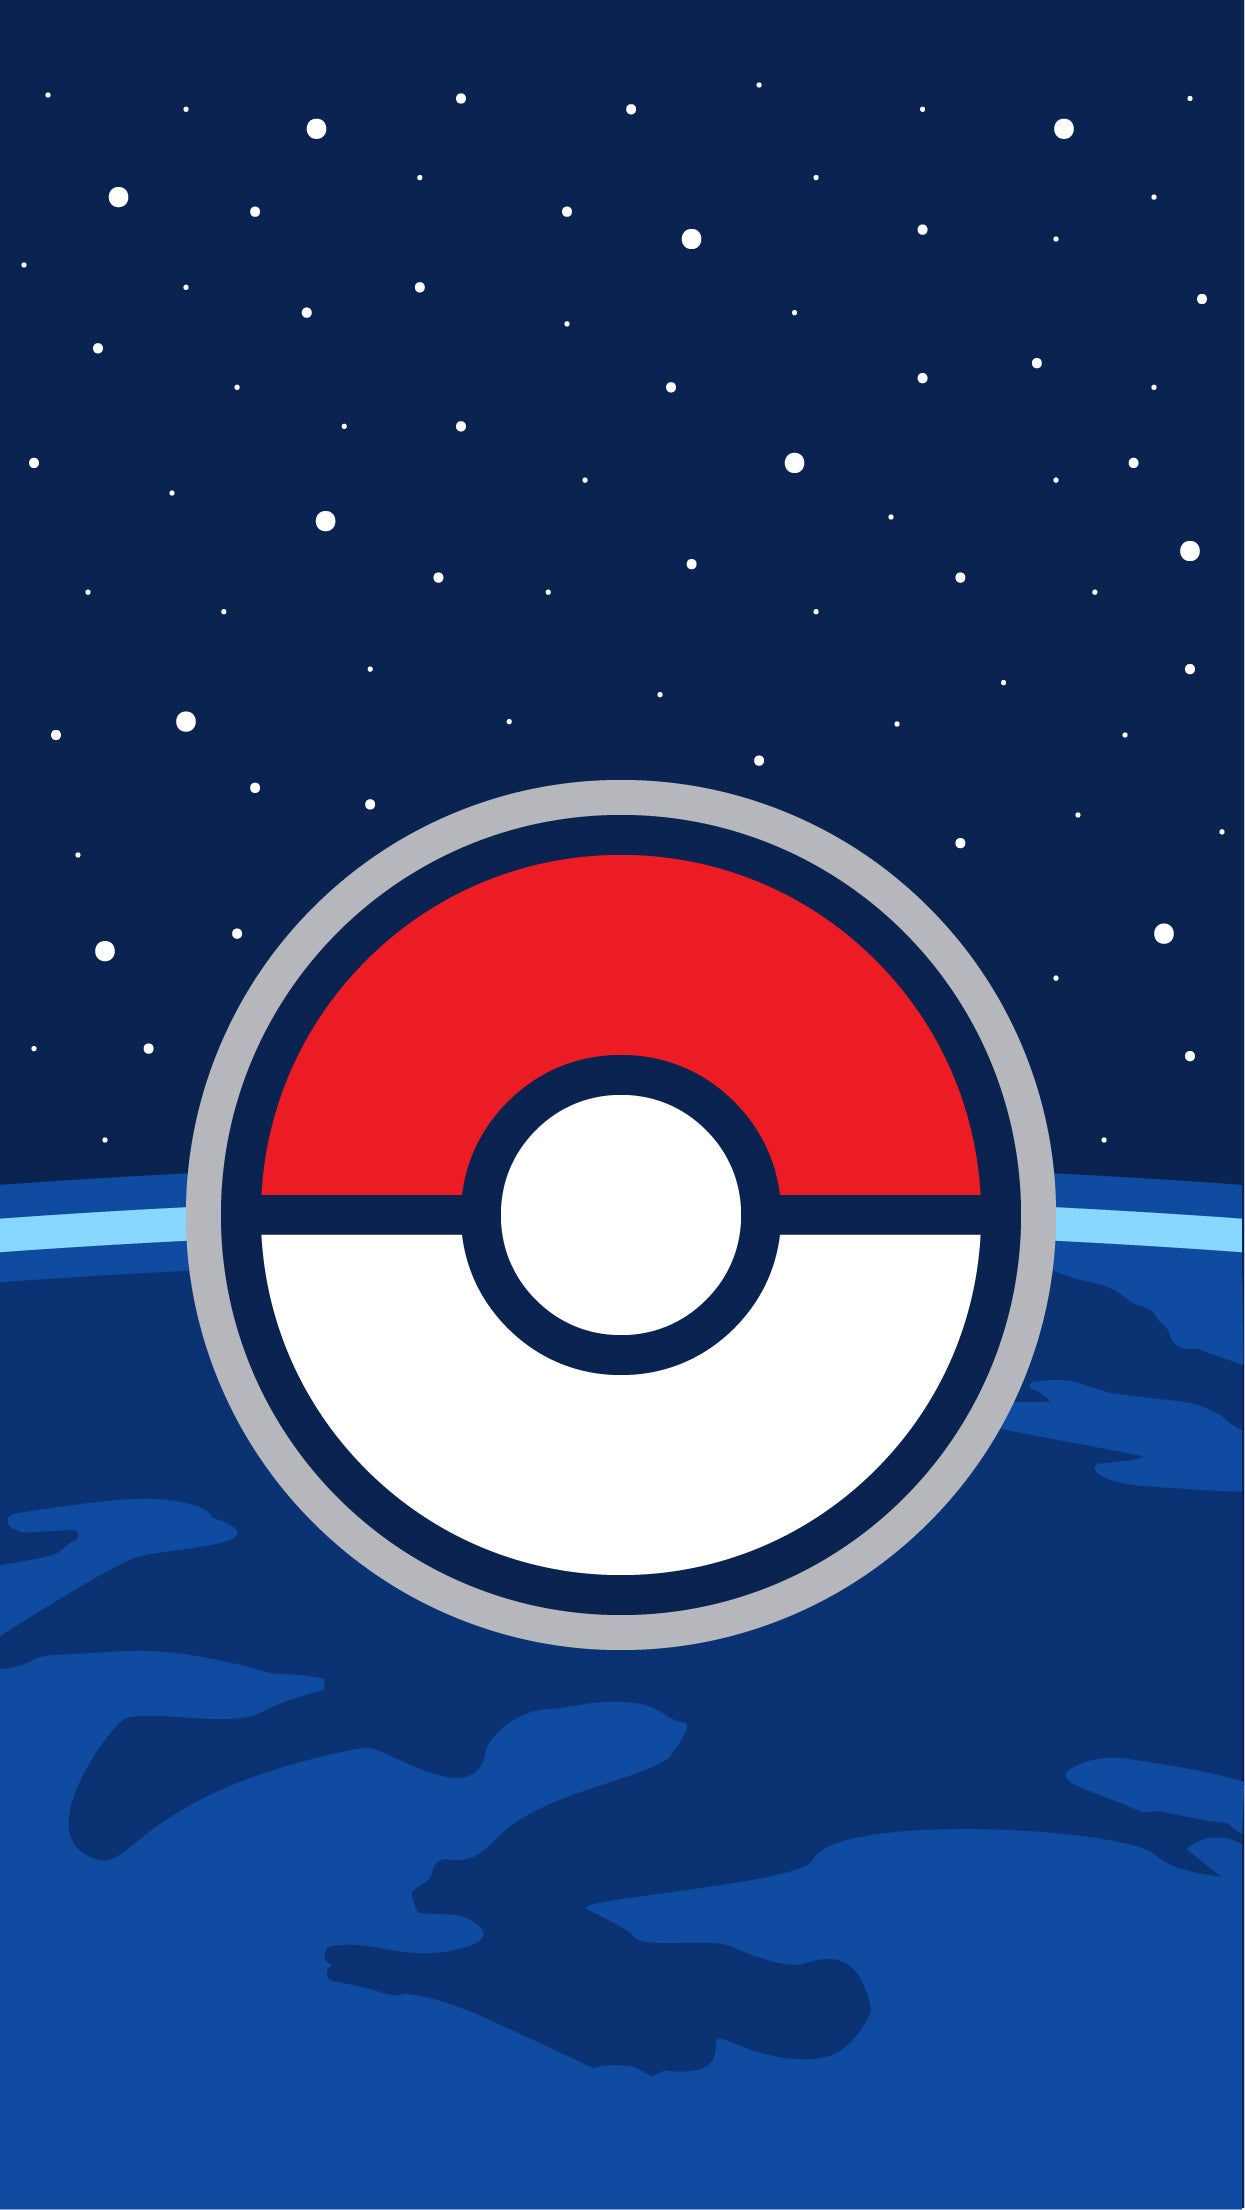 Minimal Pokemon GO Wallpaper for iPhone 8 Plus